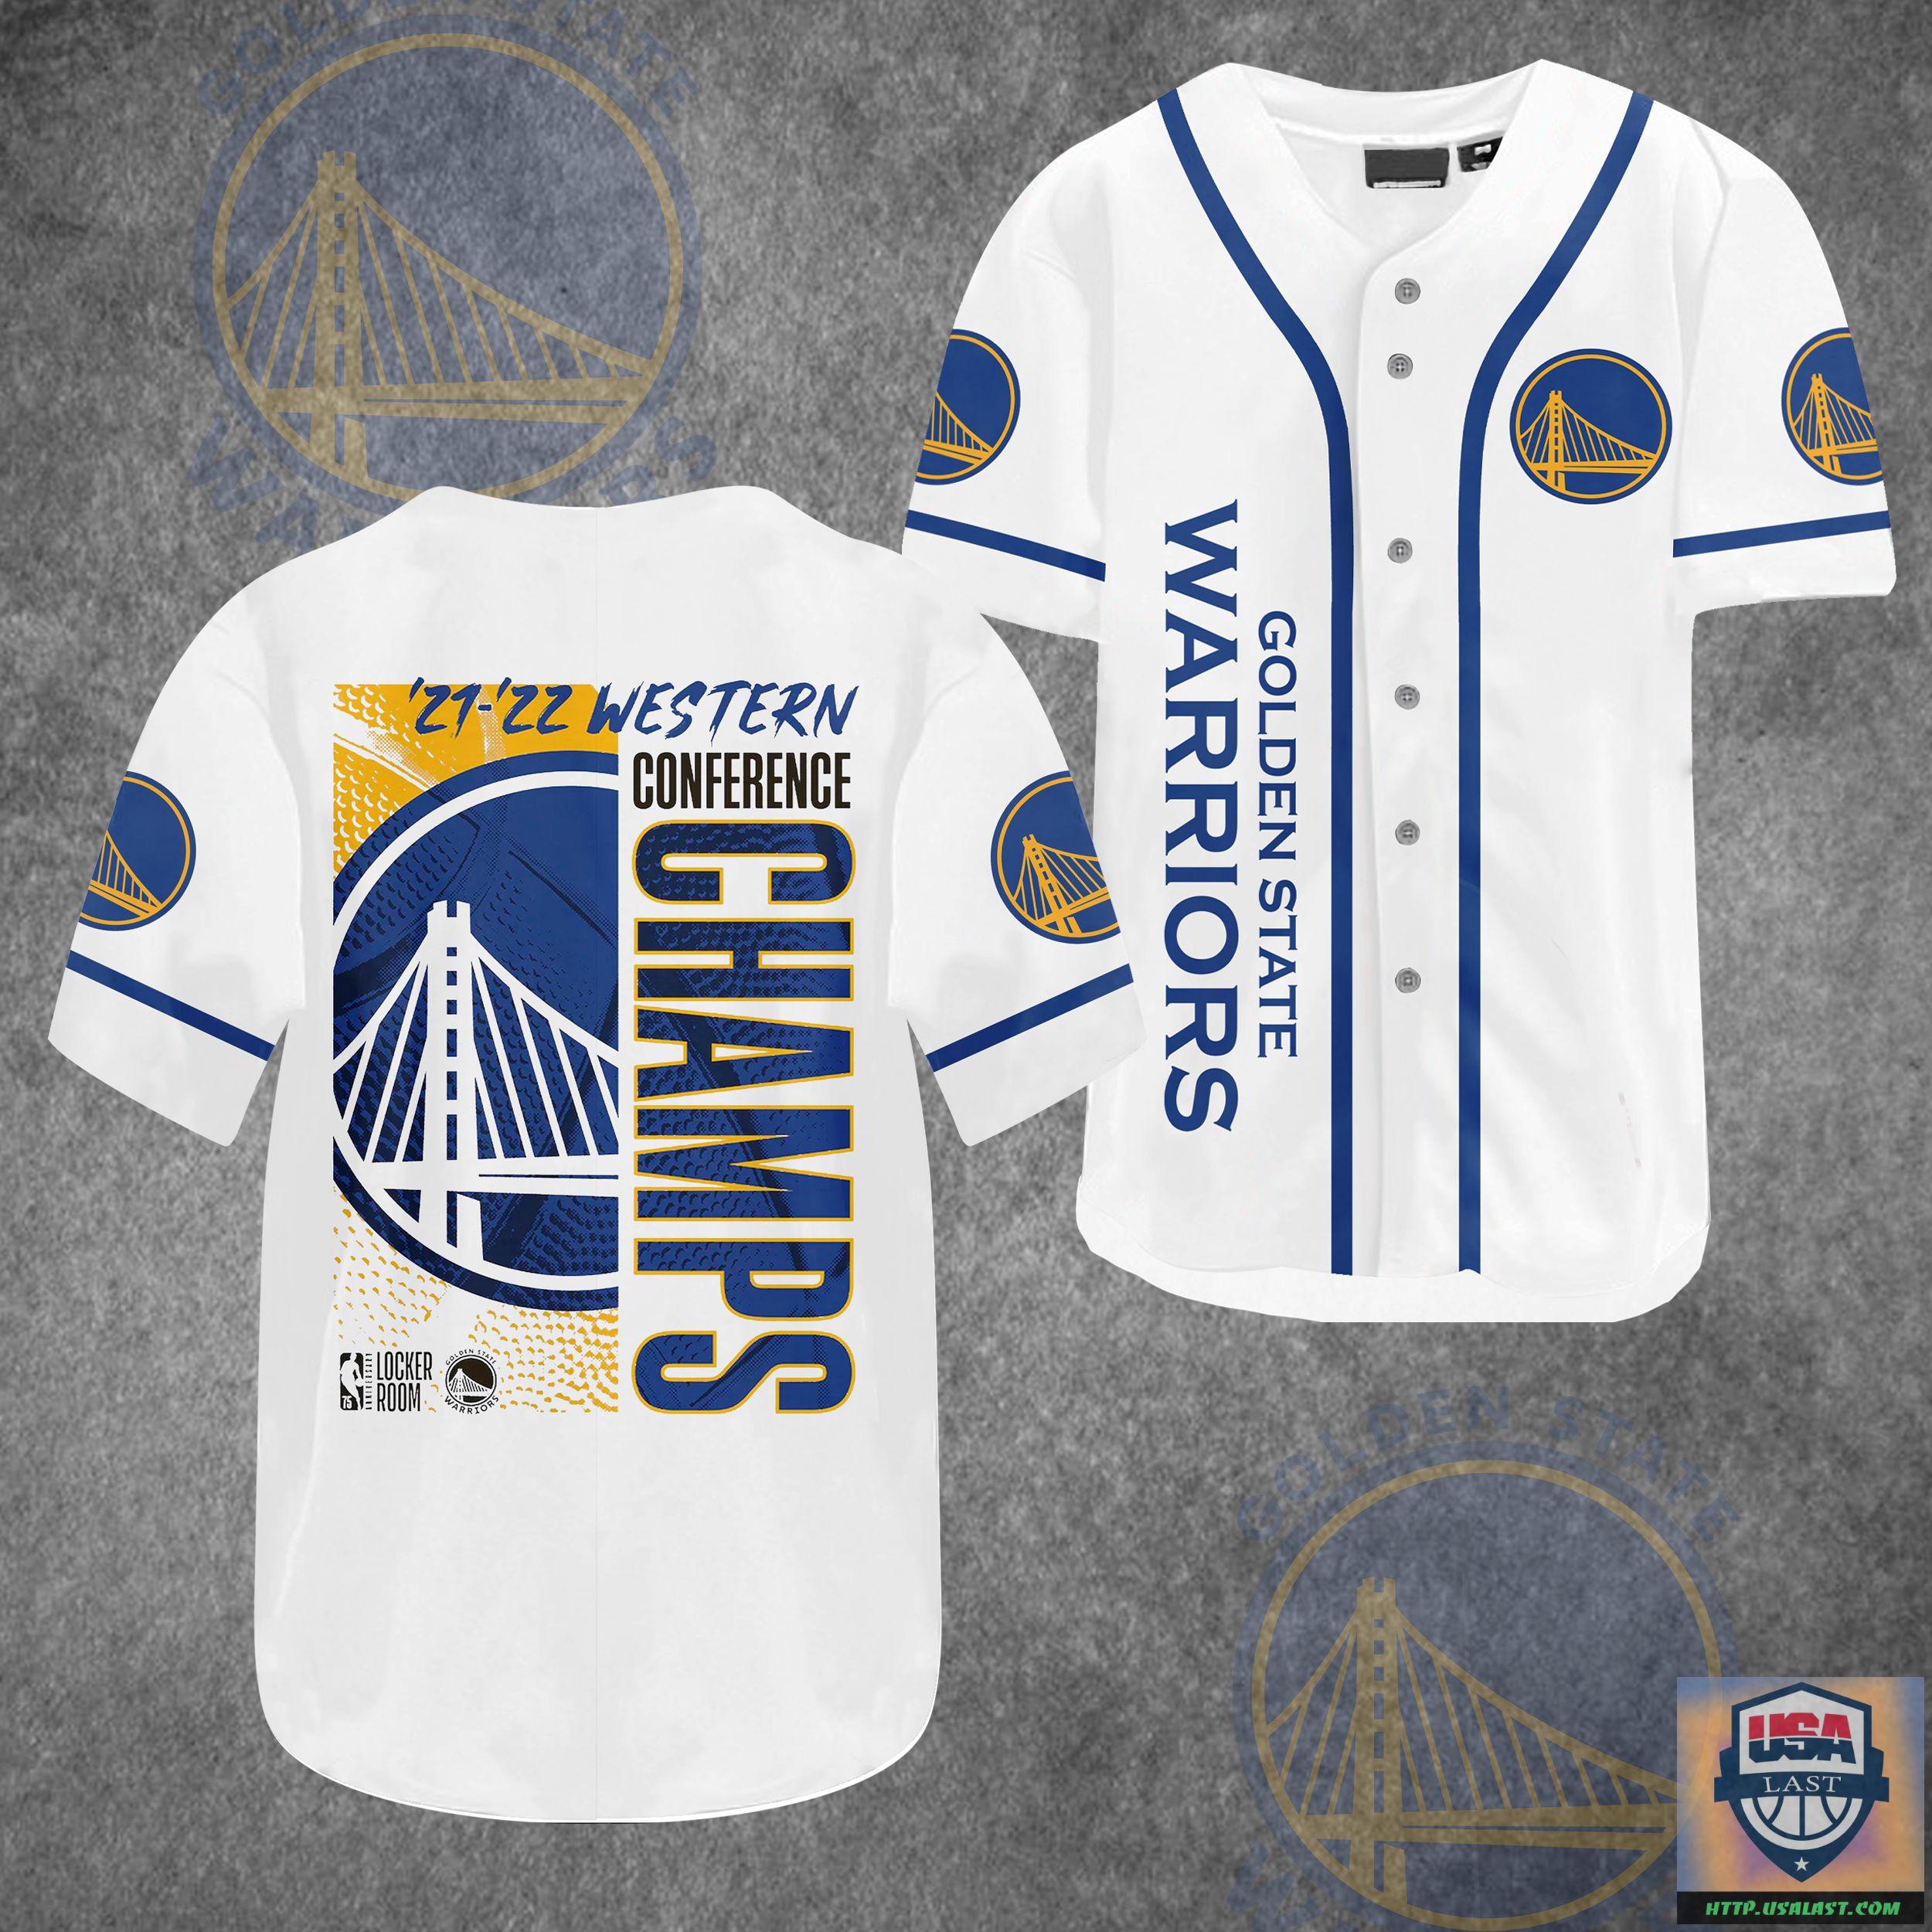 Golden State Warriors Conference Champs Baseball Jersey Shirt – Usalast